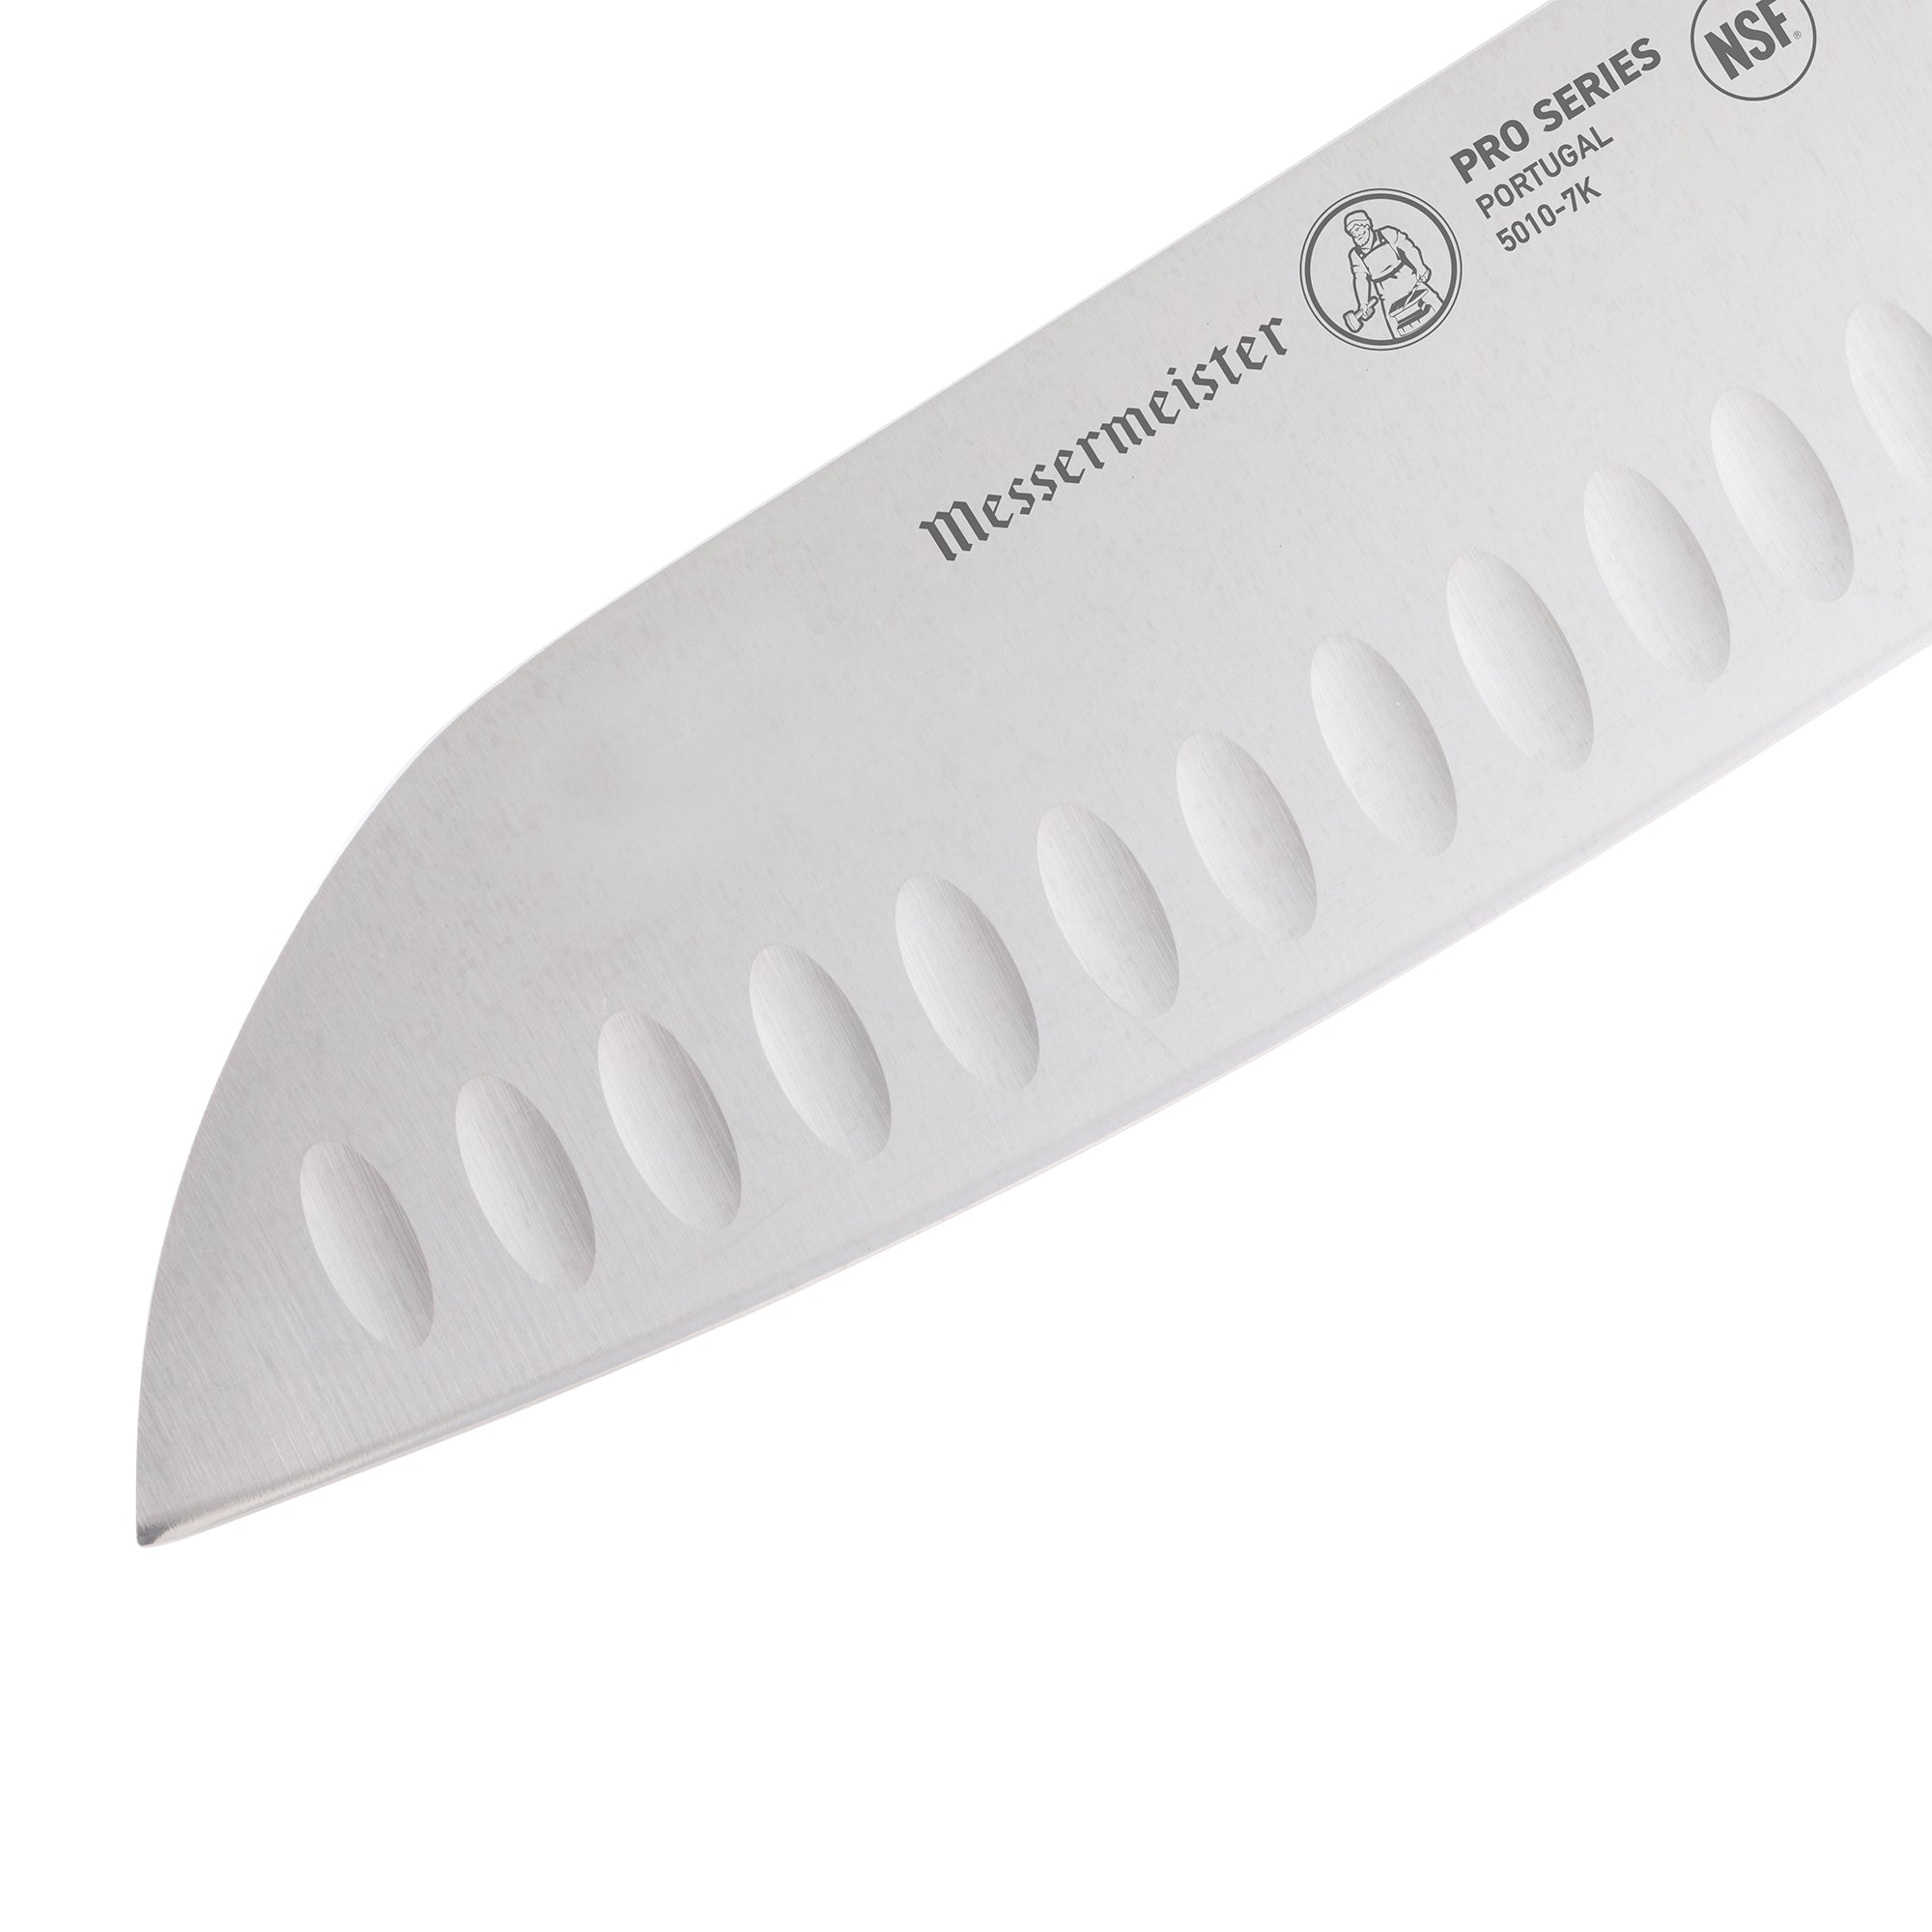 Signature 7-inch Santoku Knife – Aikido Steel